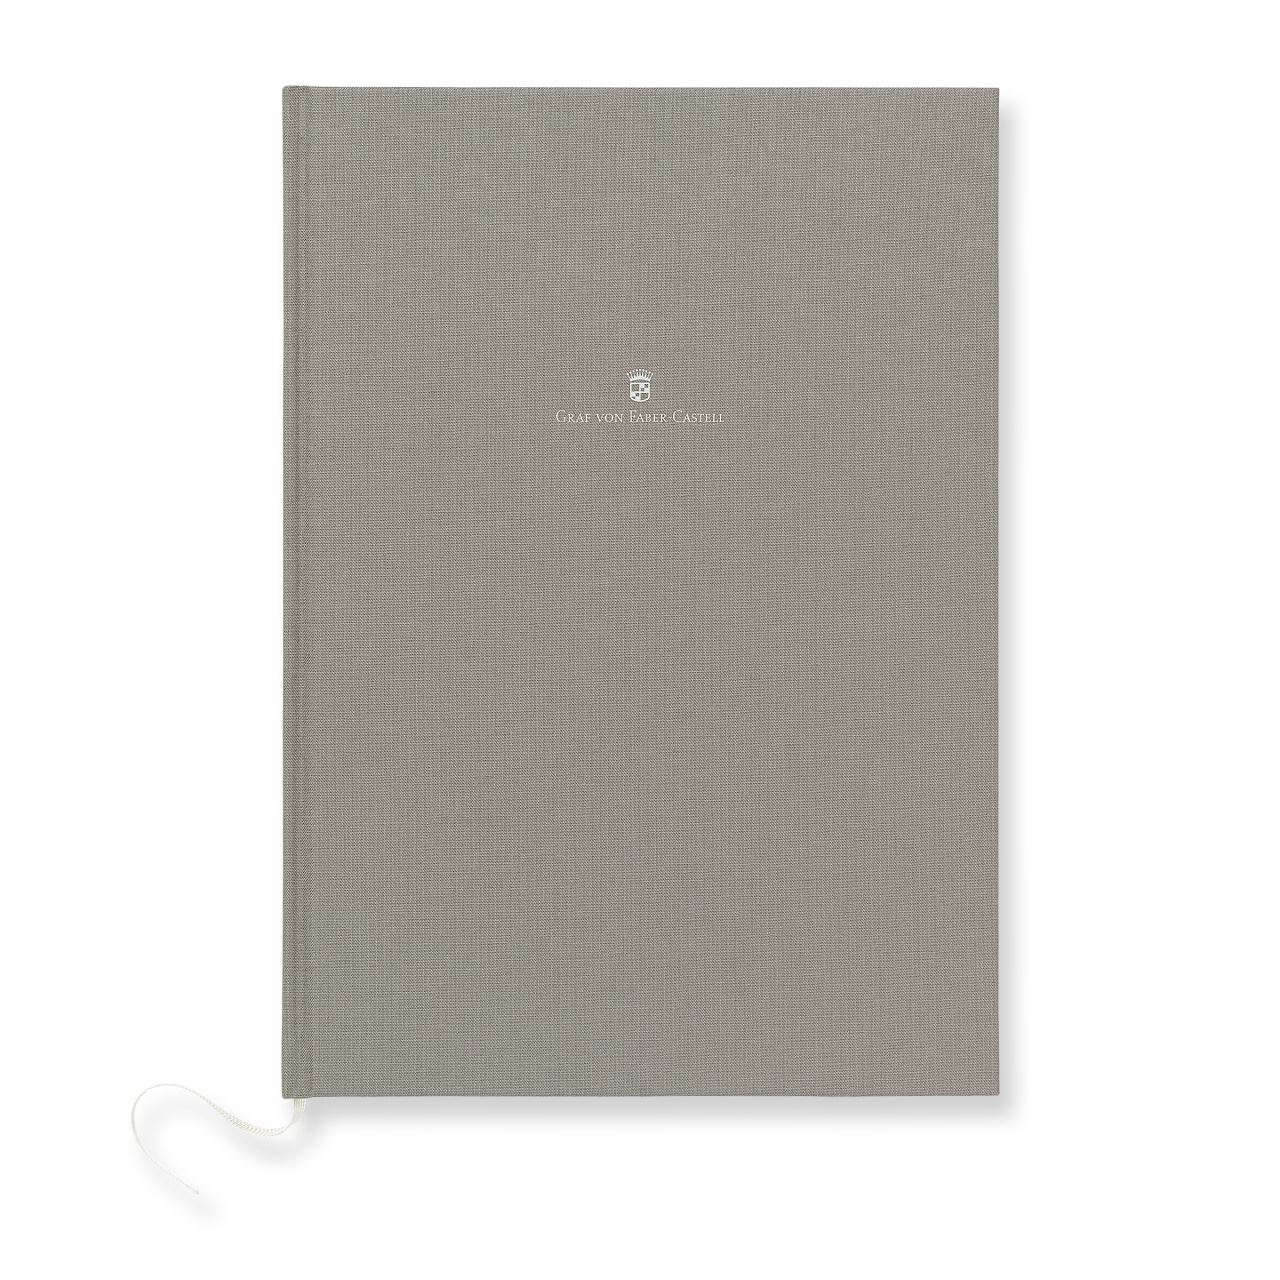 Graf-von-Faber-Castell - Cuaderno con cubierta de lino tamaño A4 gris